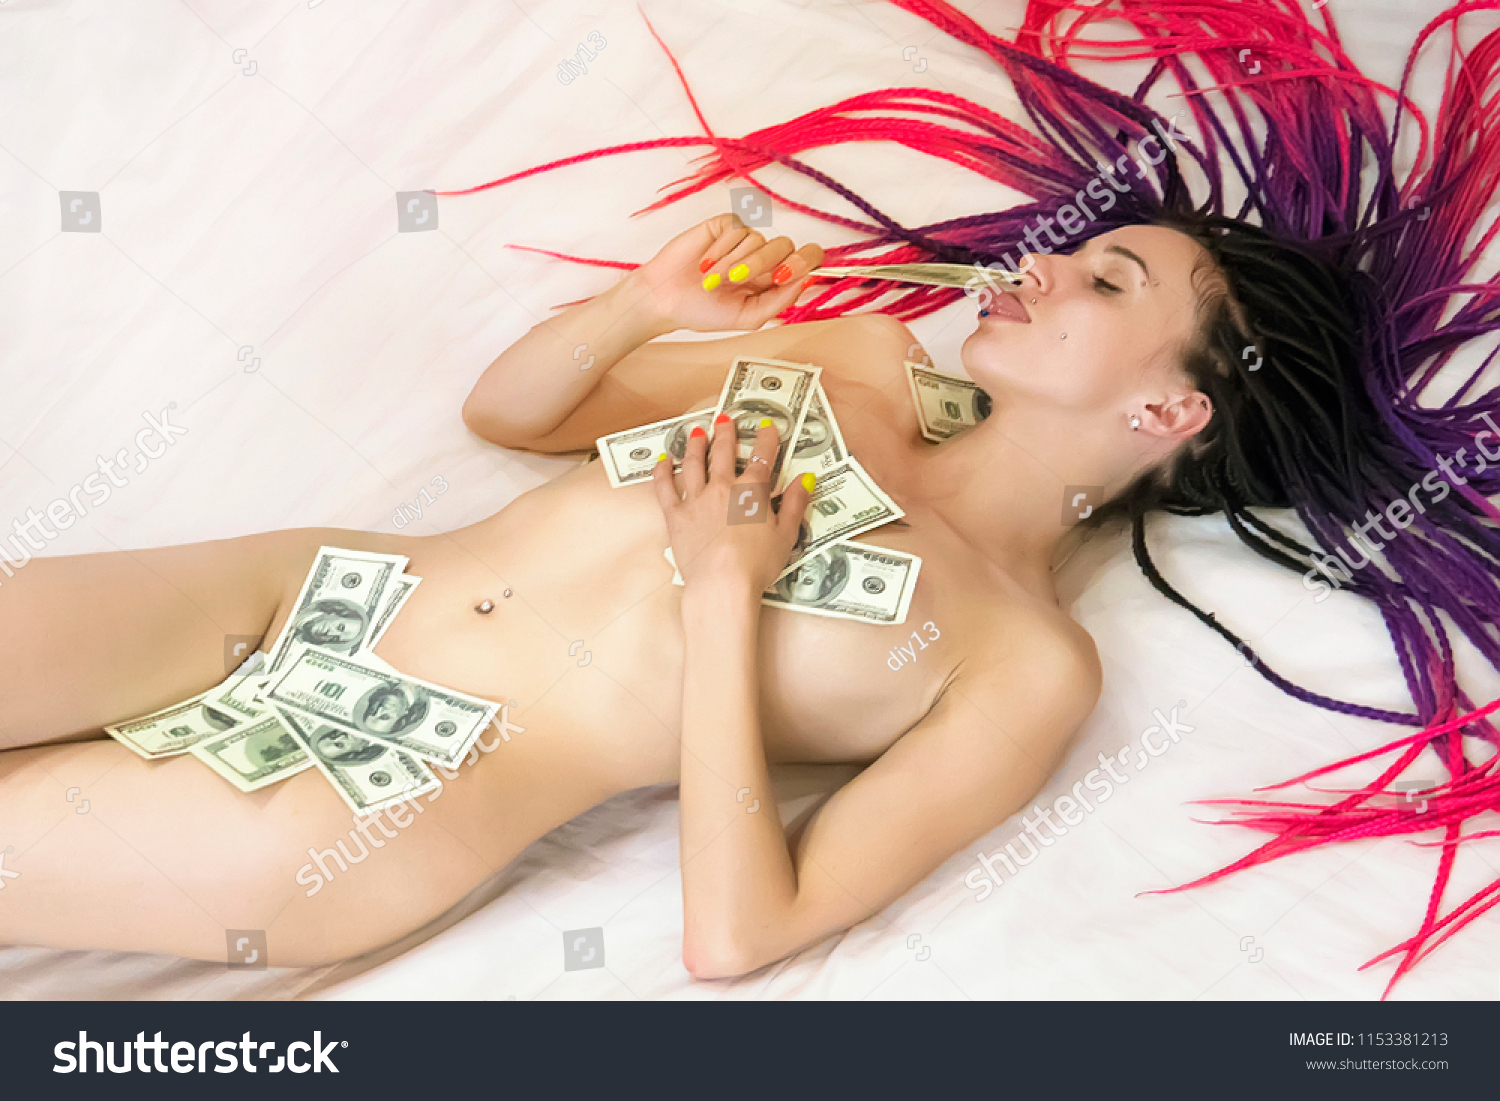 деньги и голая девушка фото фото 13